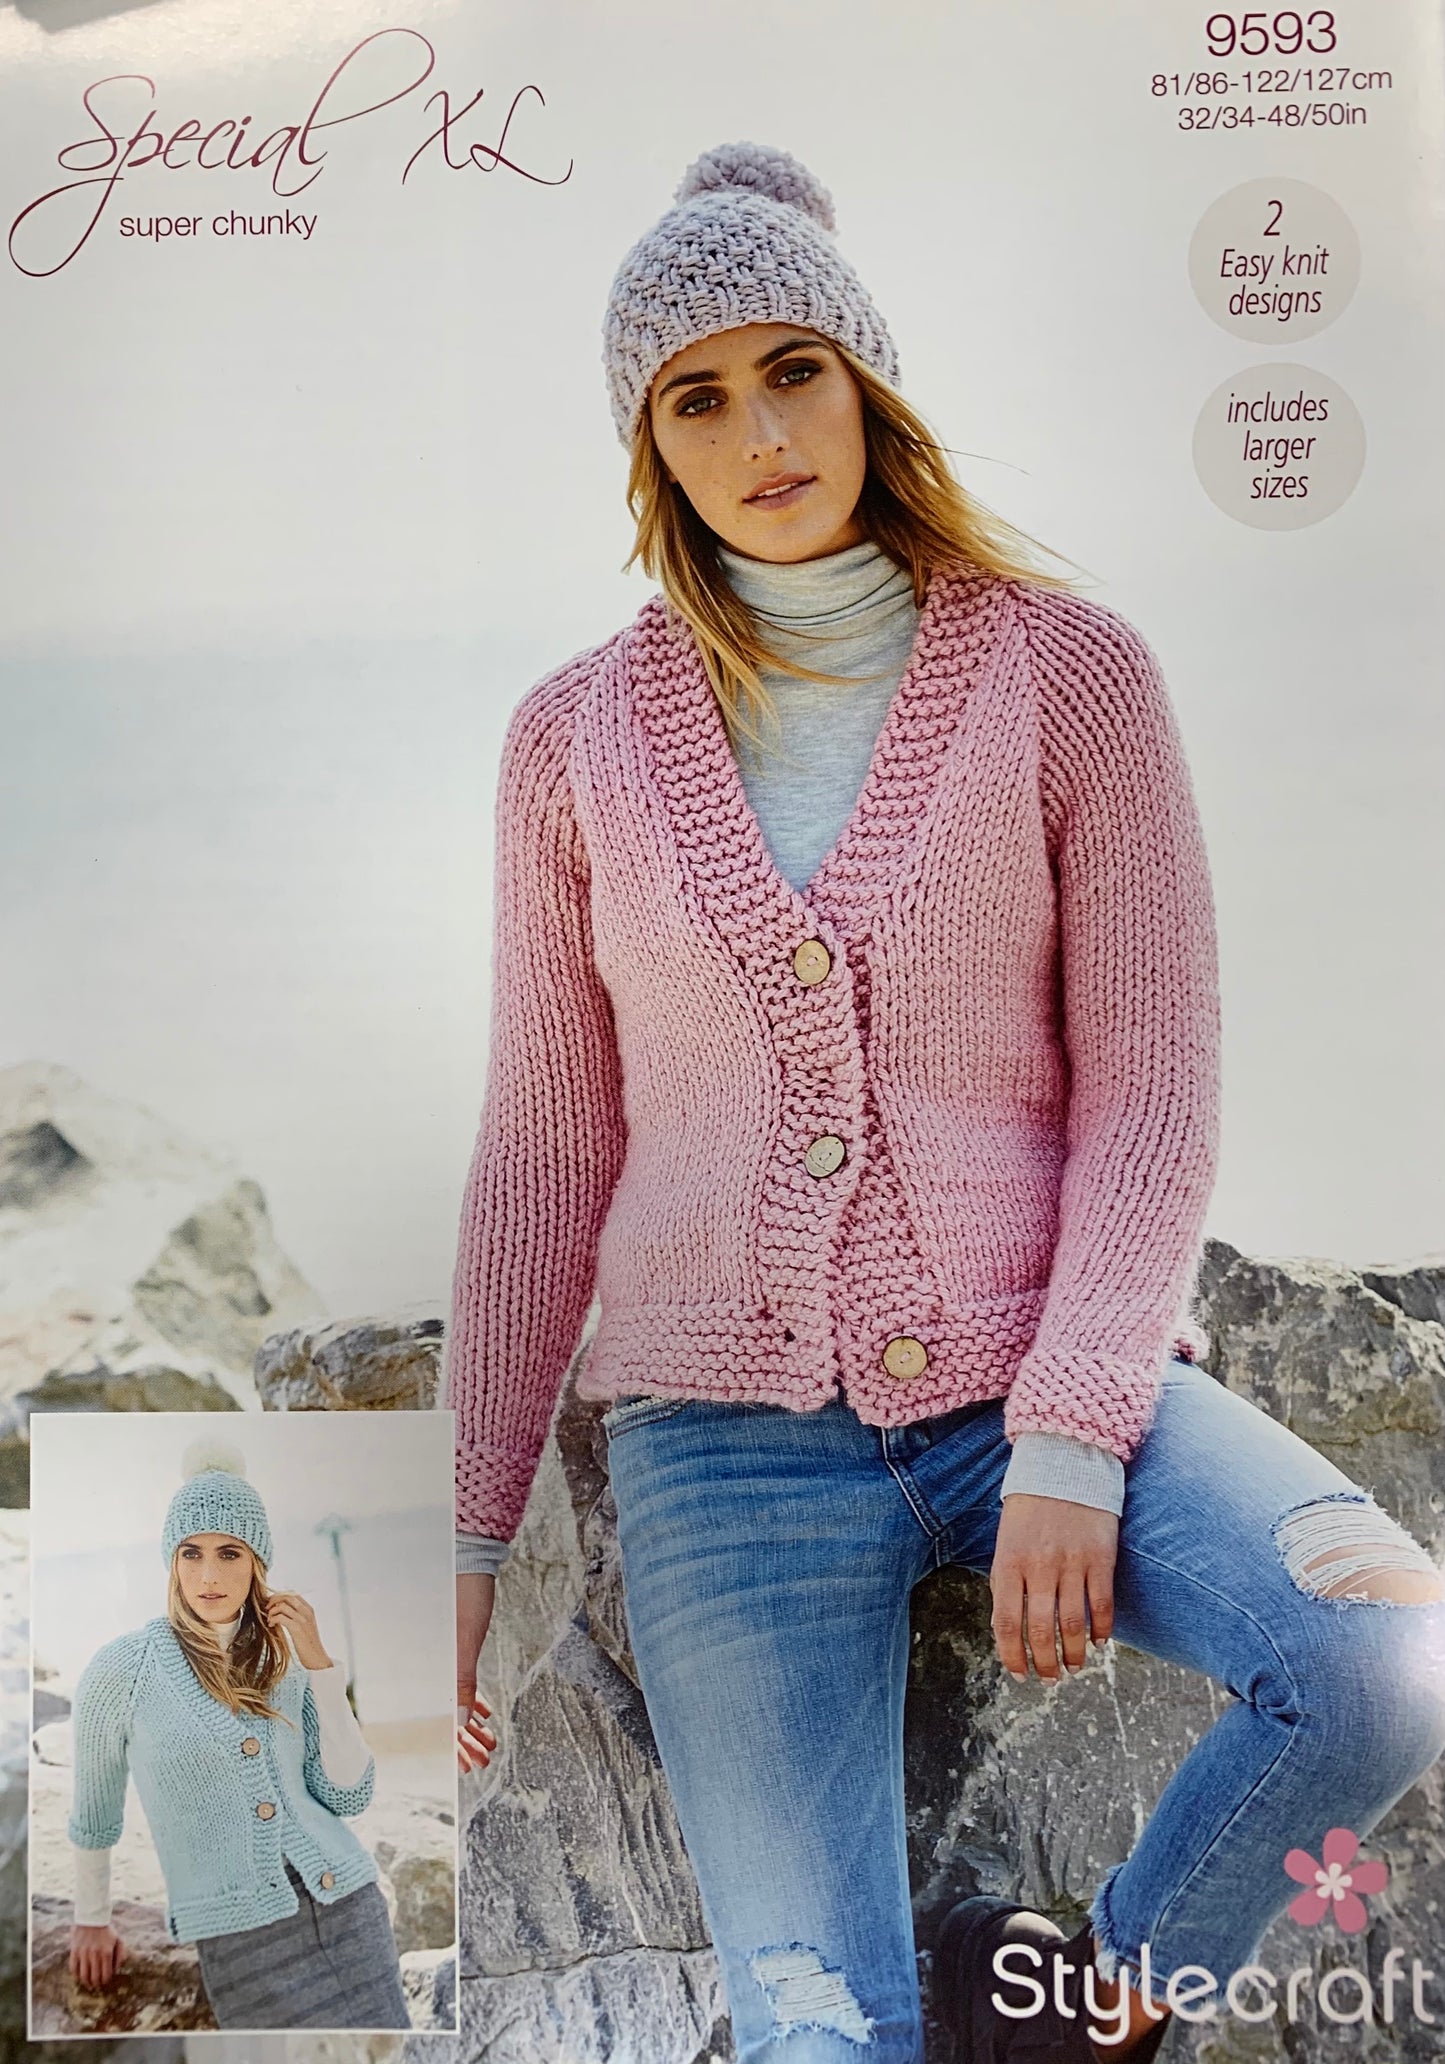 9593 Stylecraft Special XL super chunky ladies cardigans knitting pattern